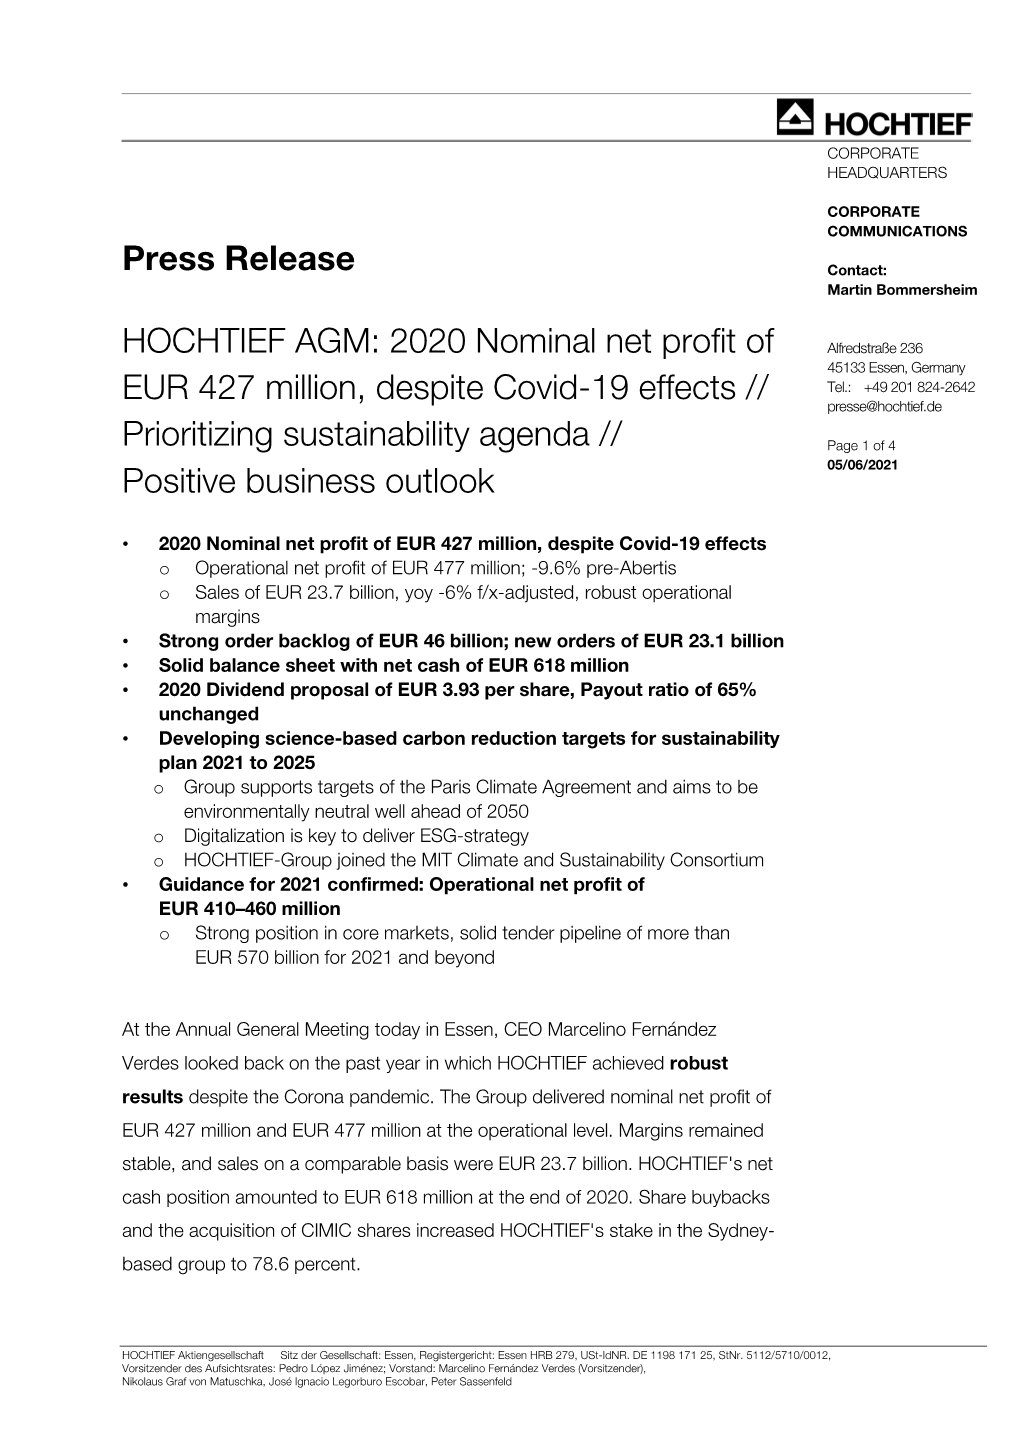 Press Release HOCHTIEF AGM: 2020 Nominal Net Profit of EUR 427